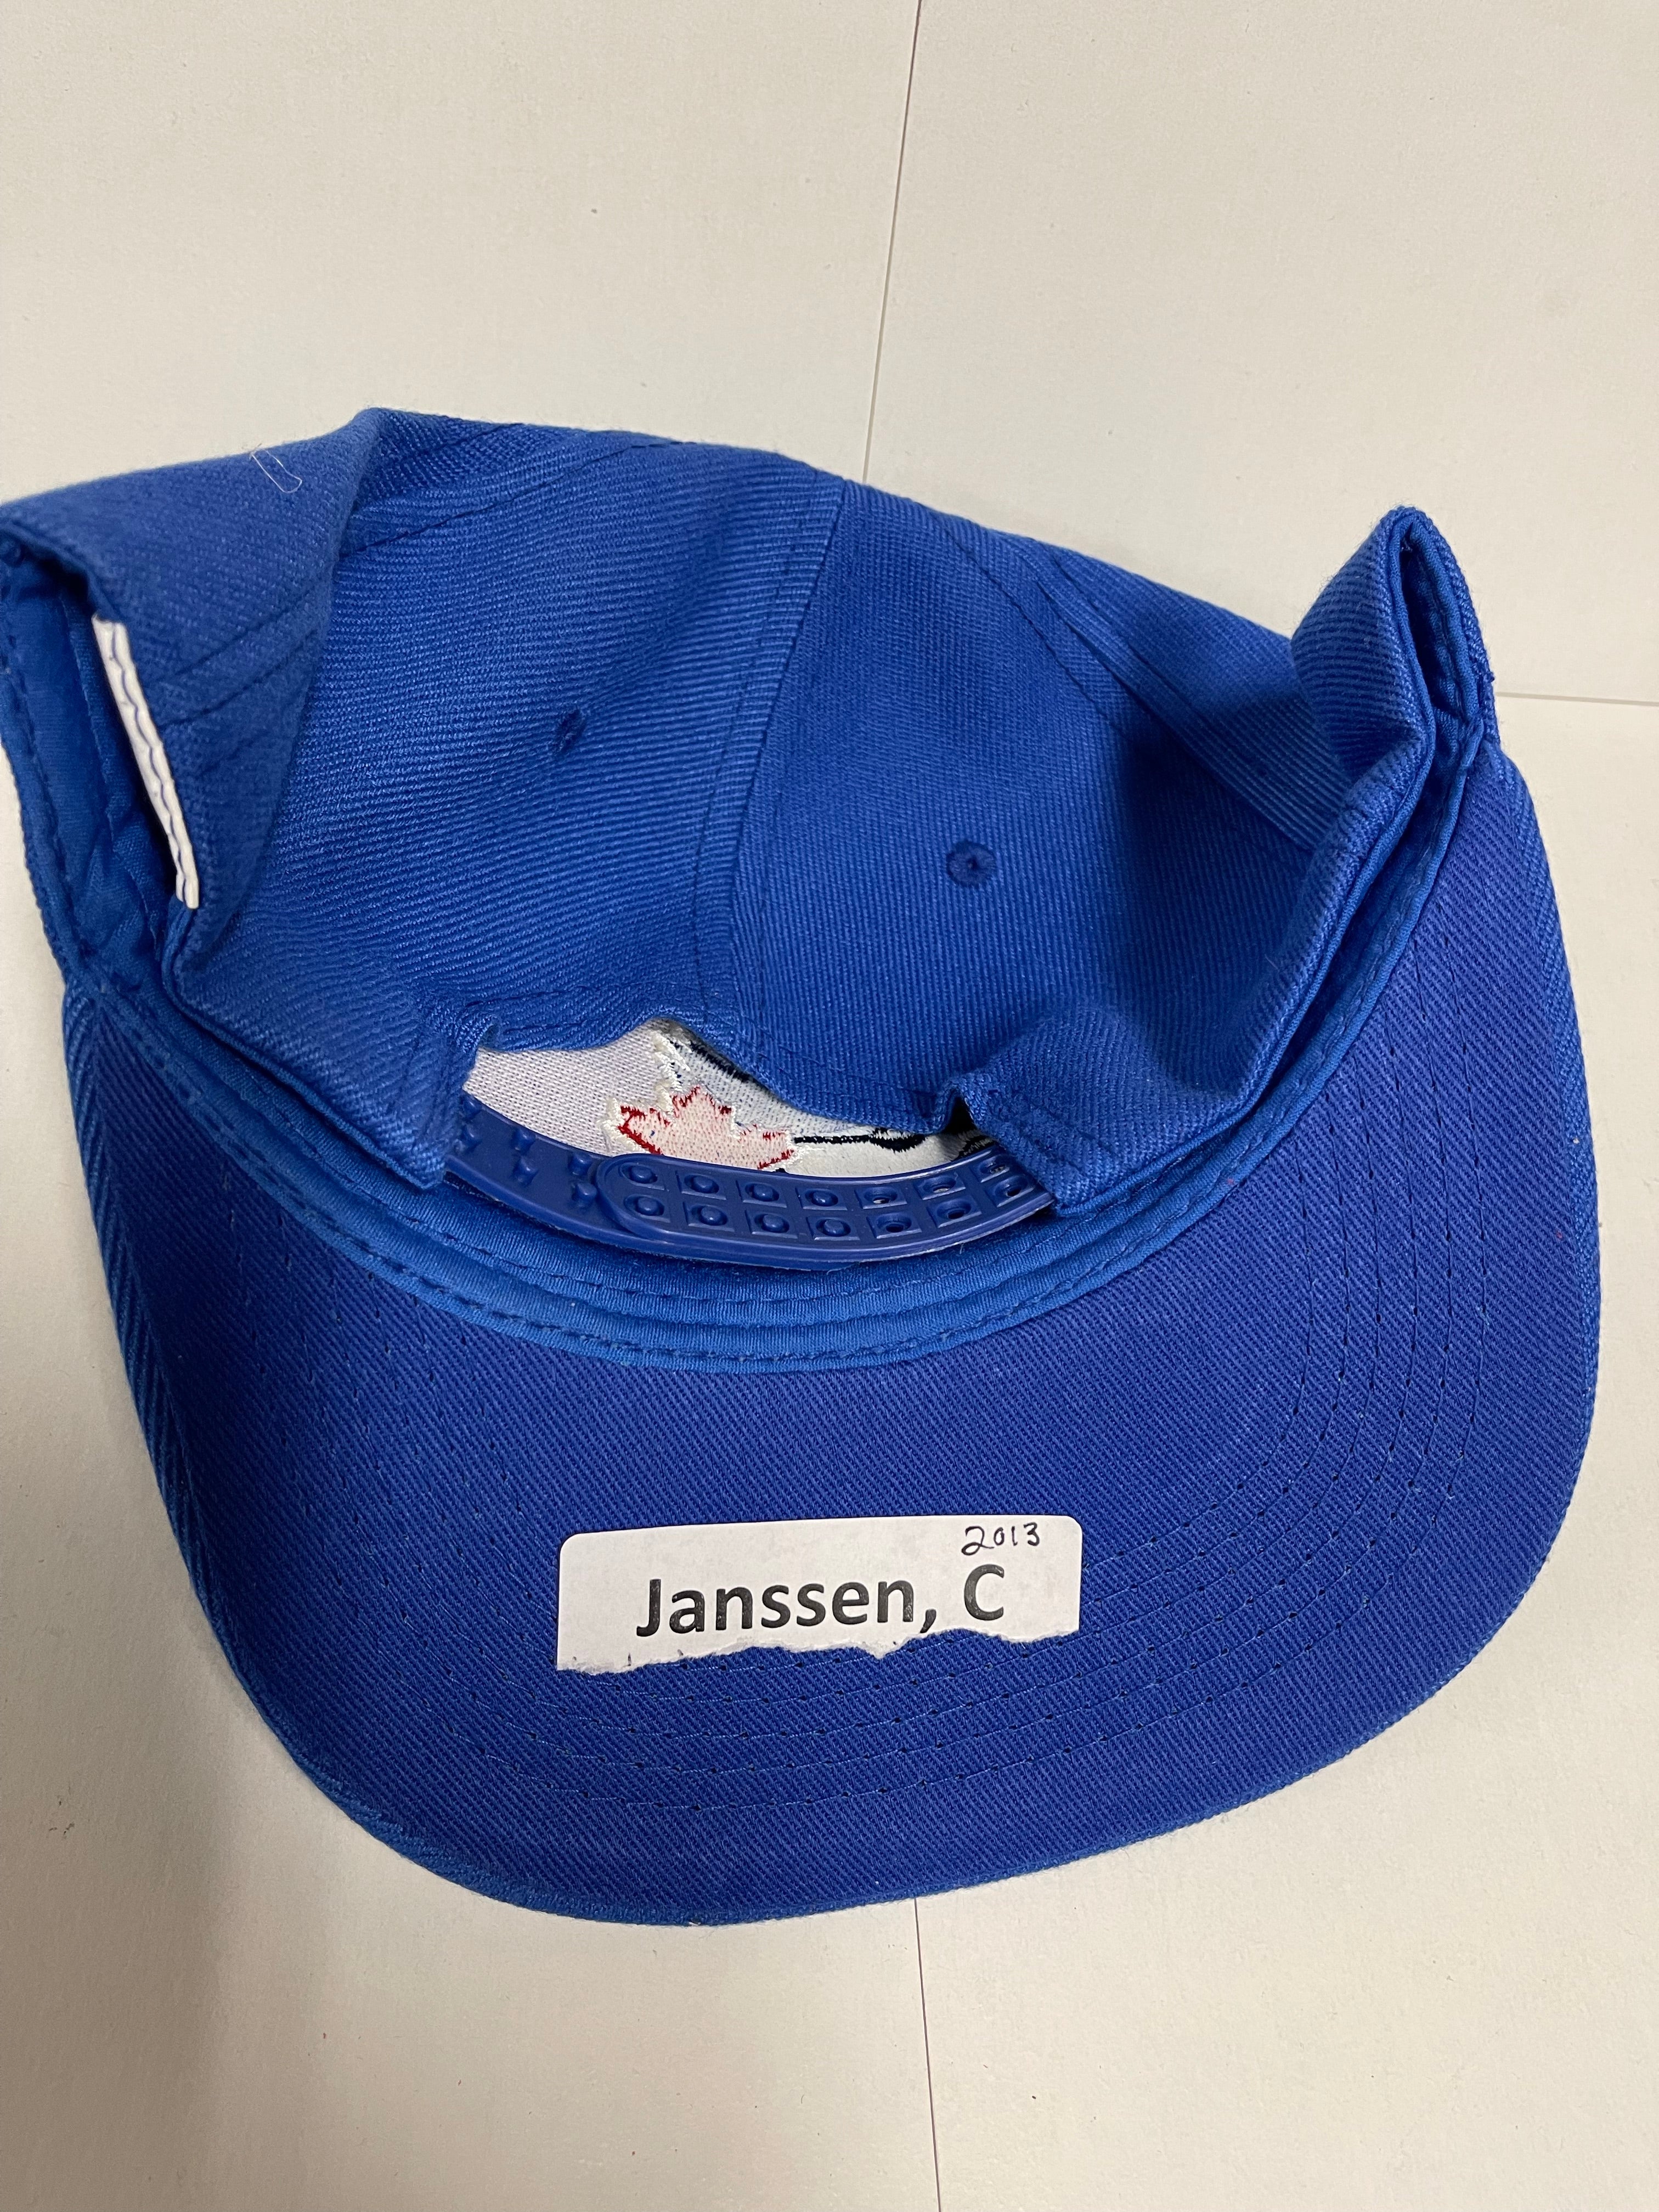 Toronto Blue Jays baseball Casey Janssen autograph baseball hat with COA